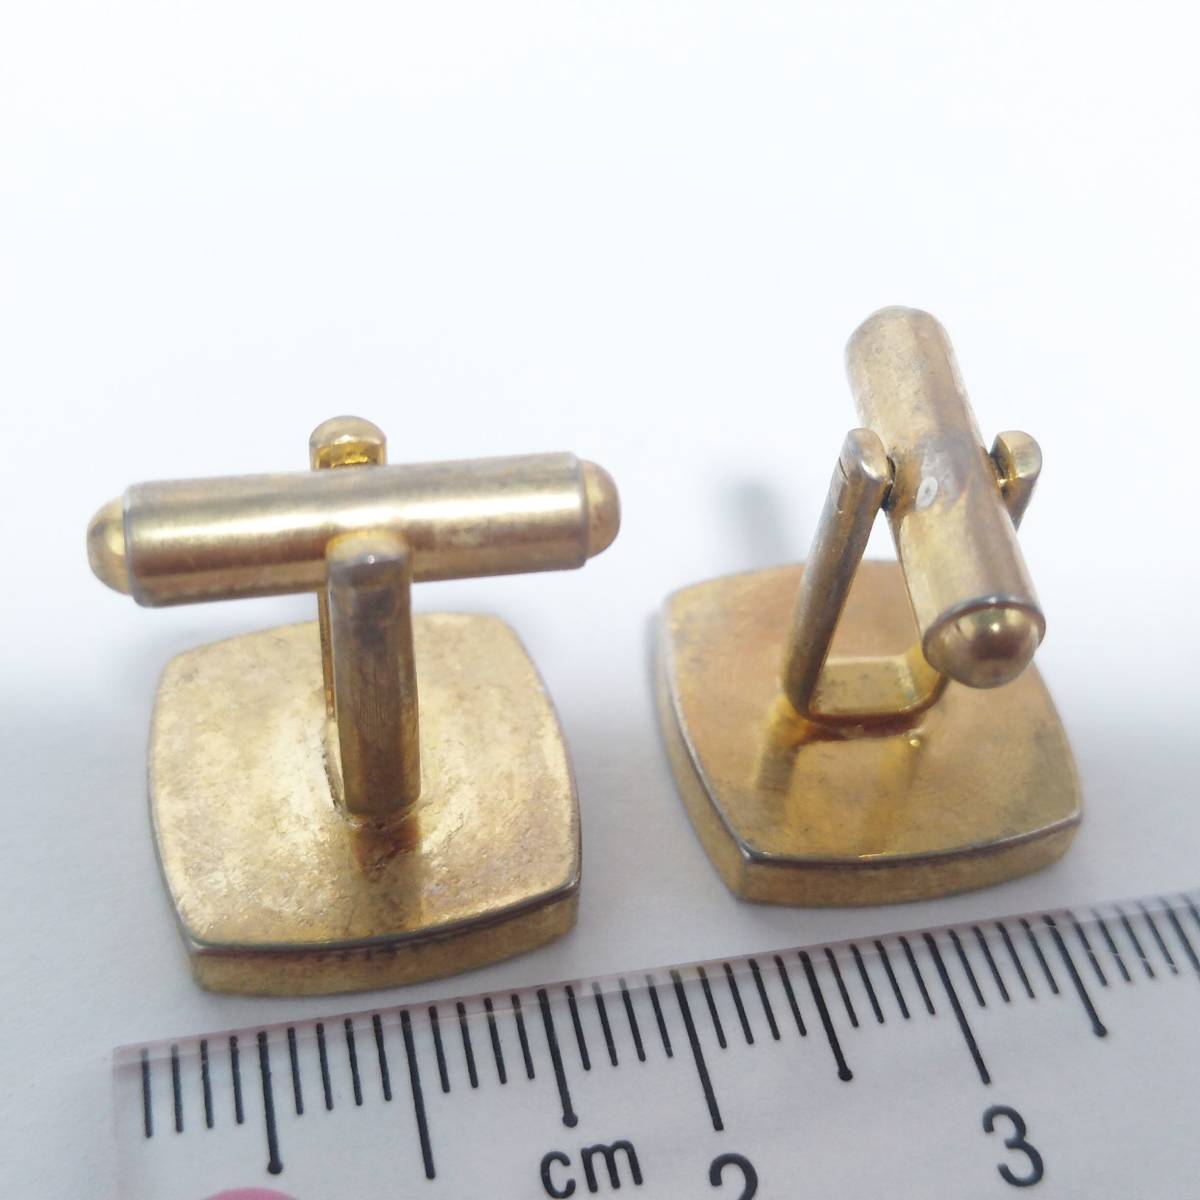 *CJ127/ cuff links / cuffs button / Gold / lever type /s weve ru type equipment ornament rhinestone star accessory free shipping 